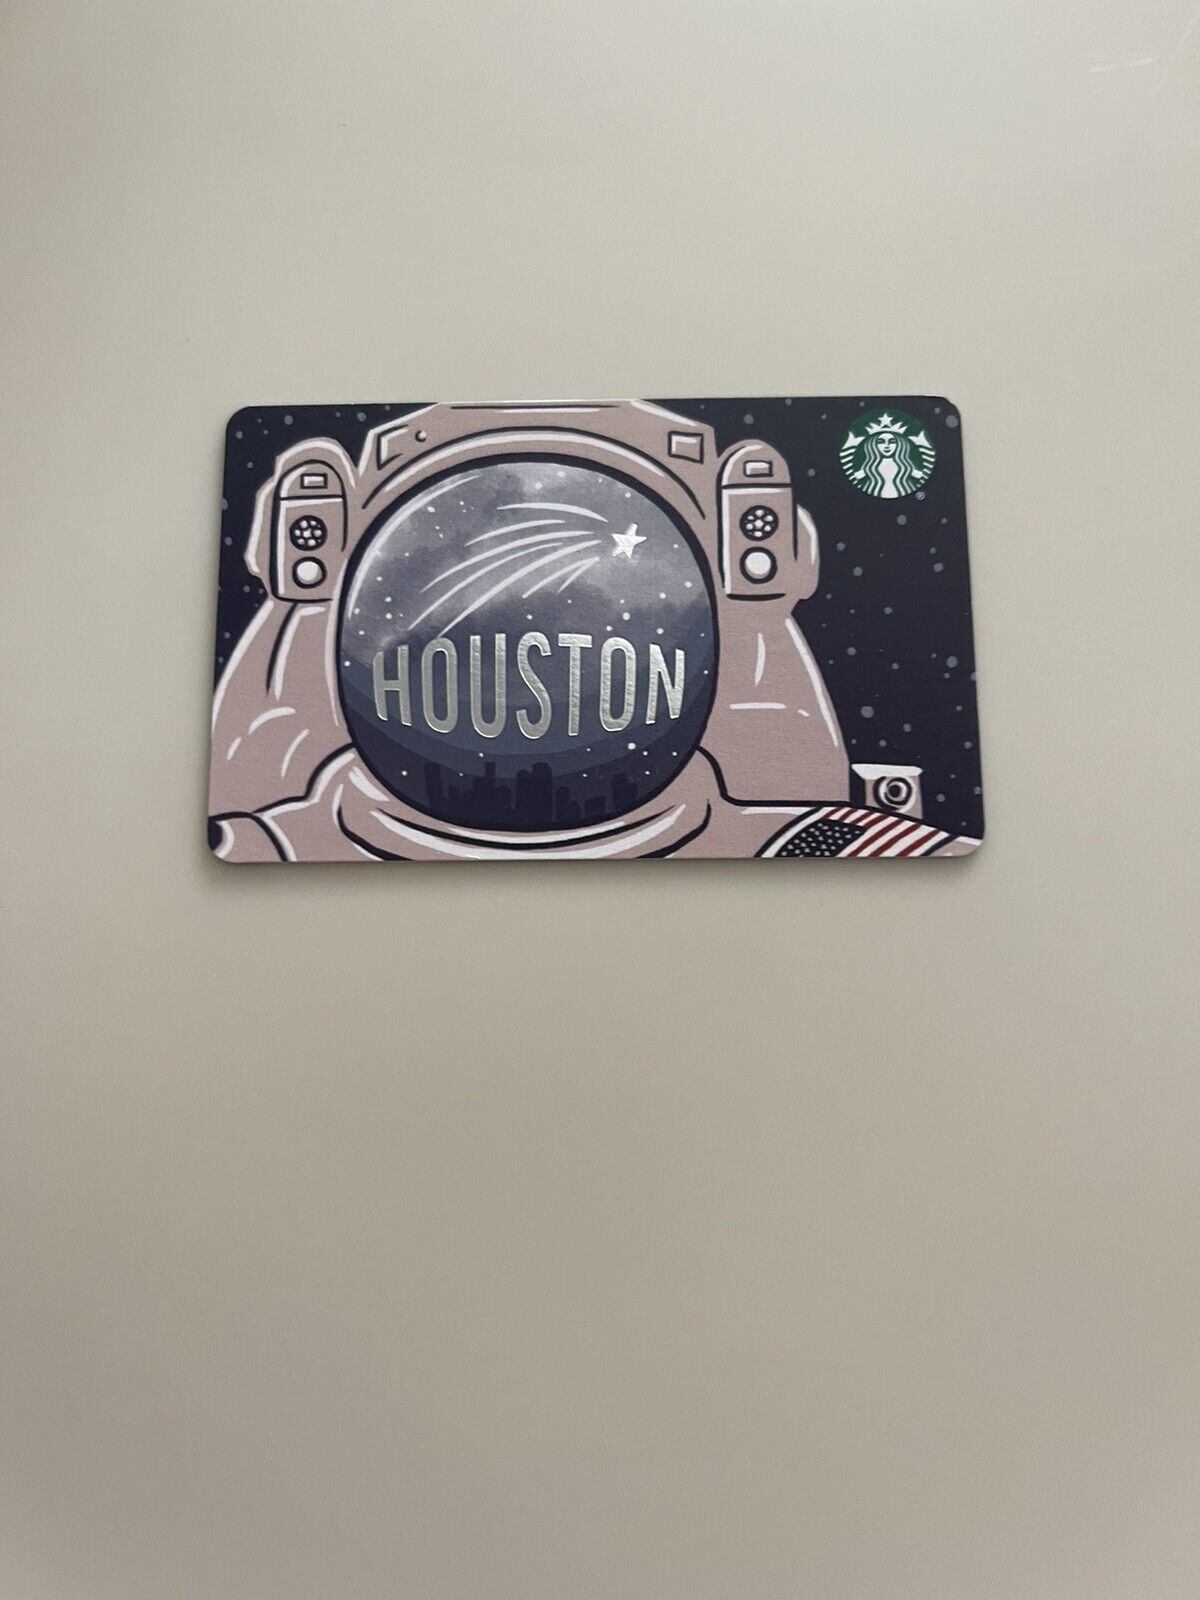 Starbucks cards